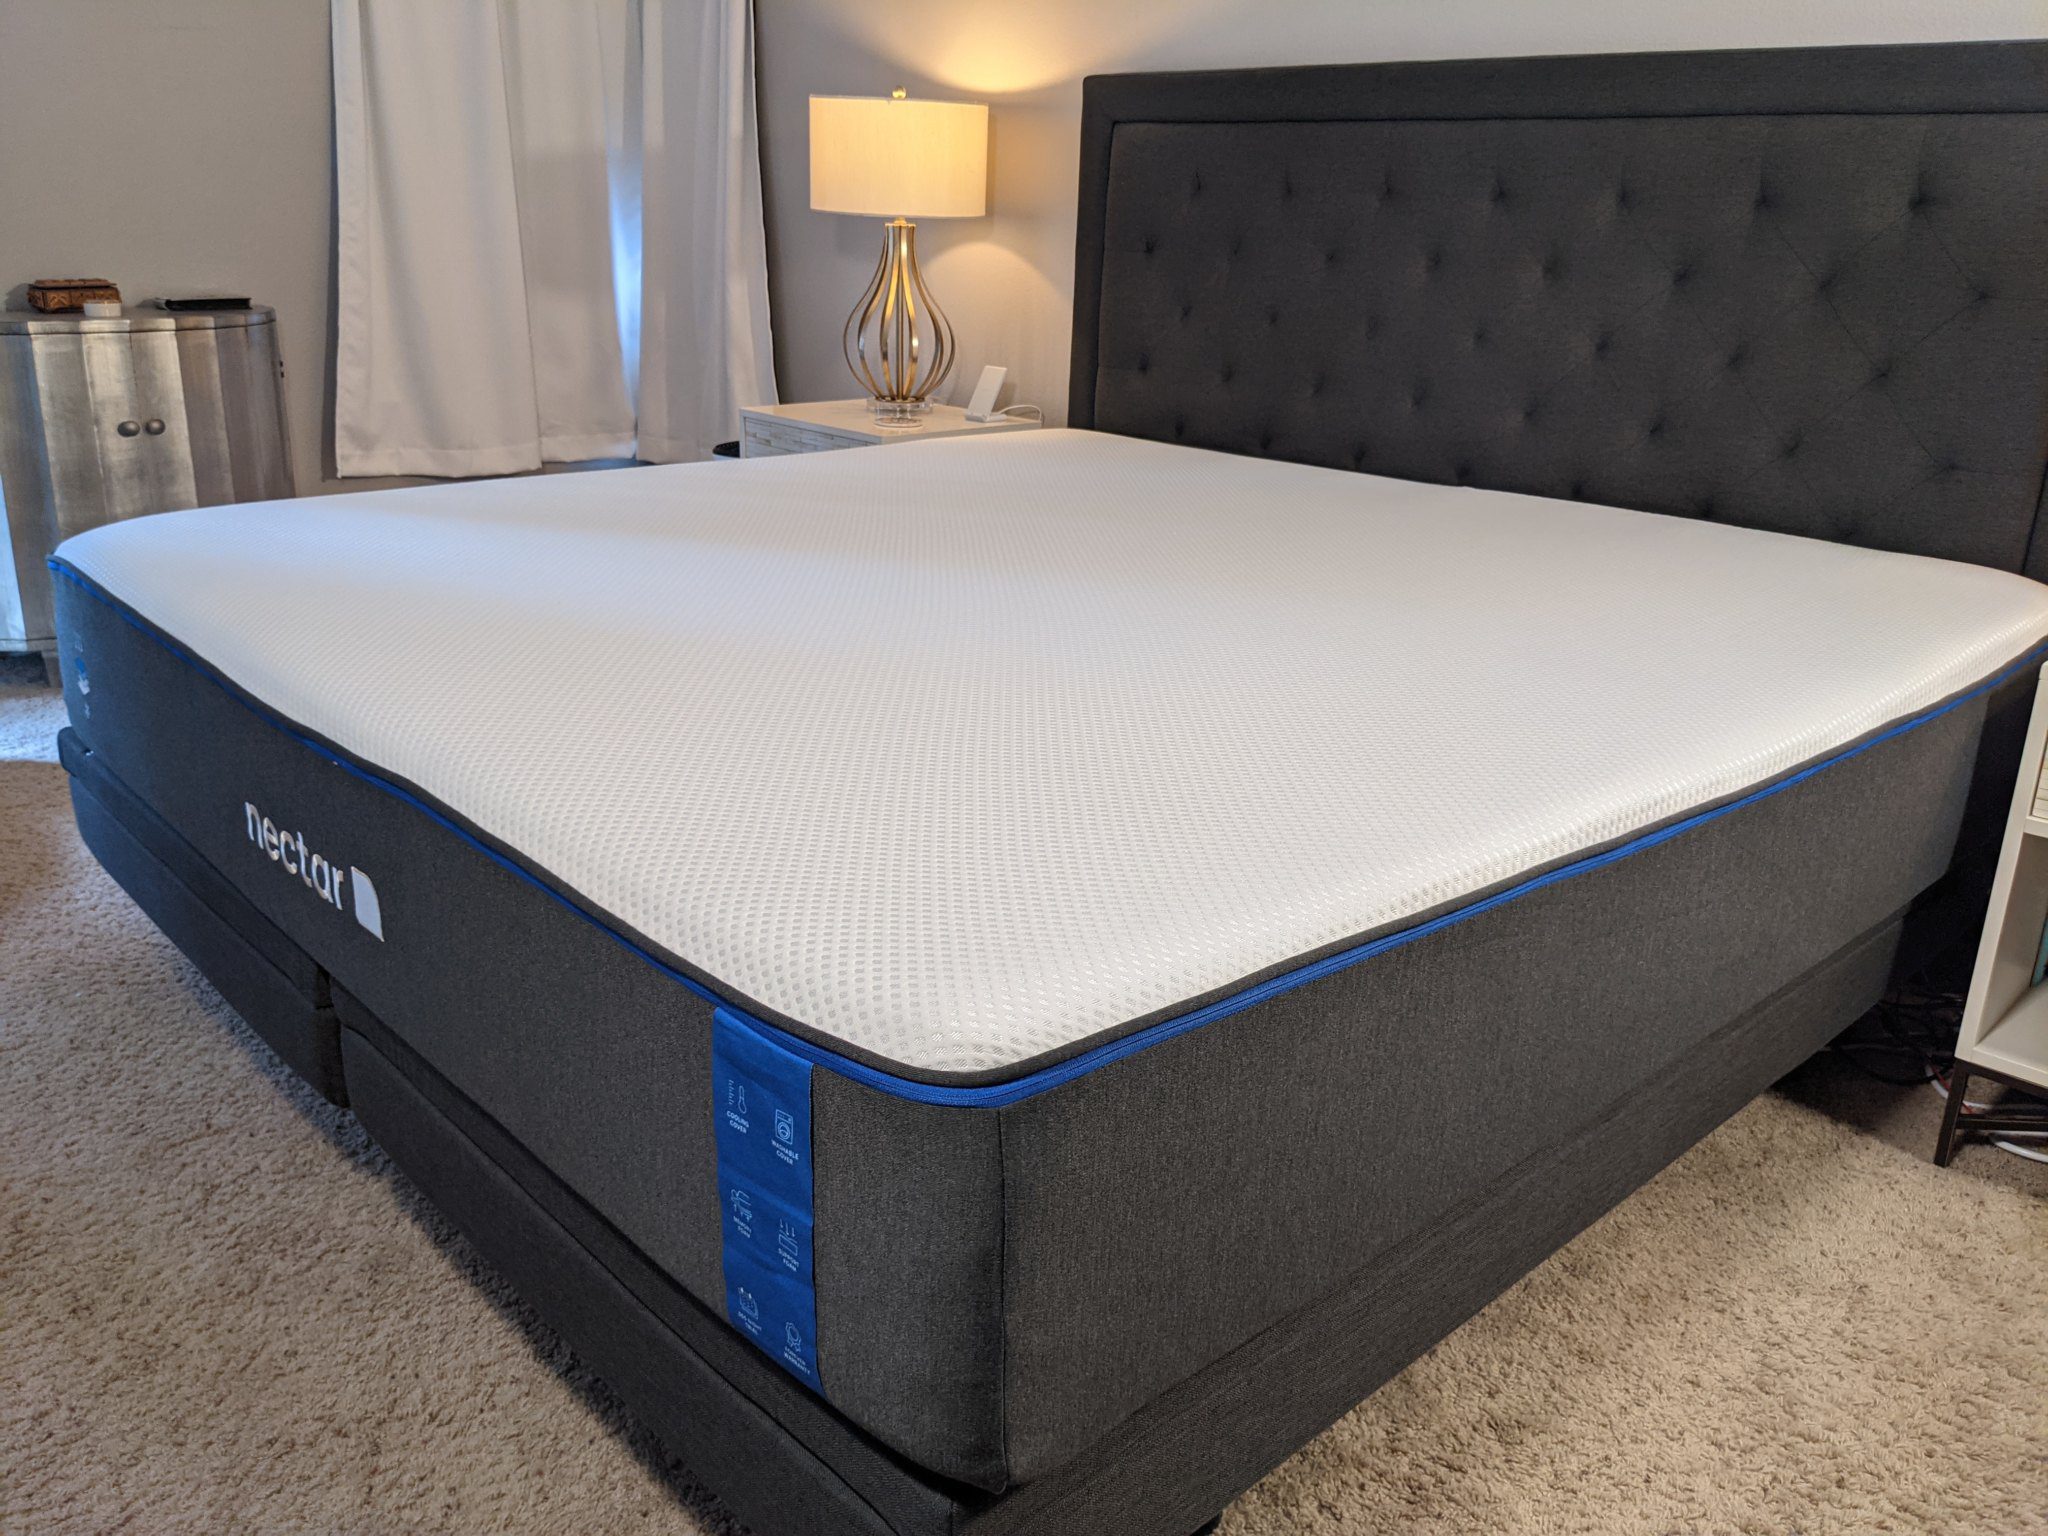 consumer reviews for nectar mattress